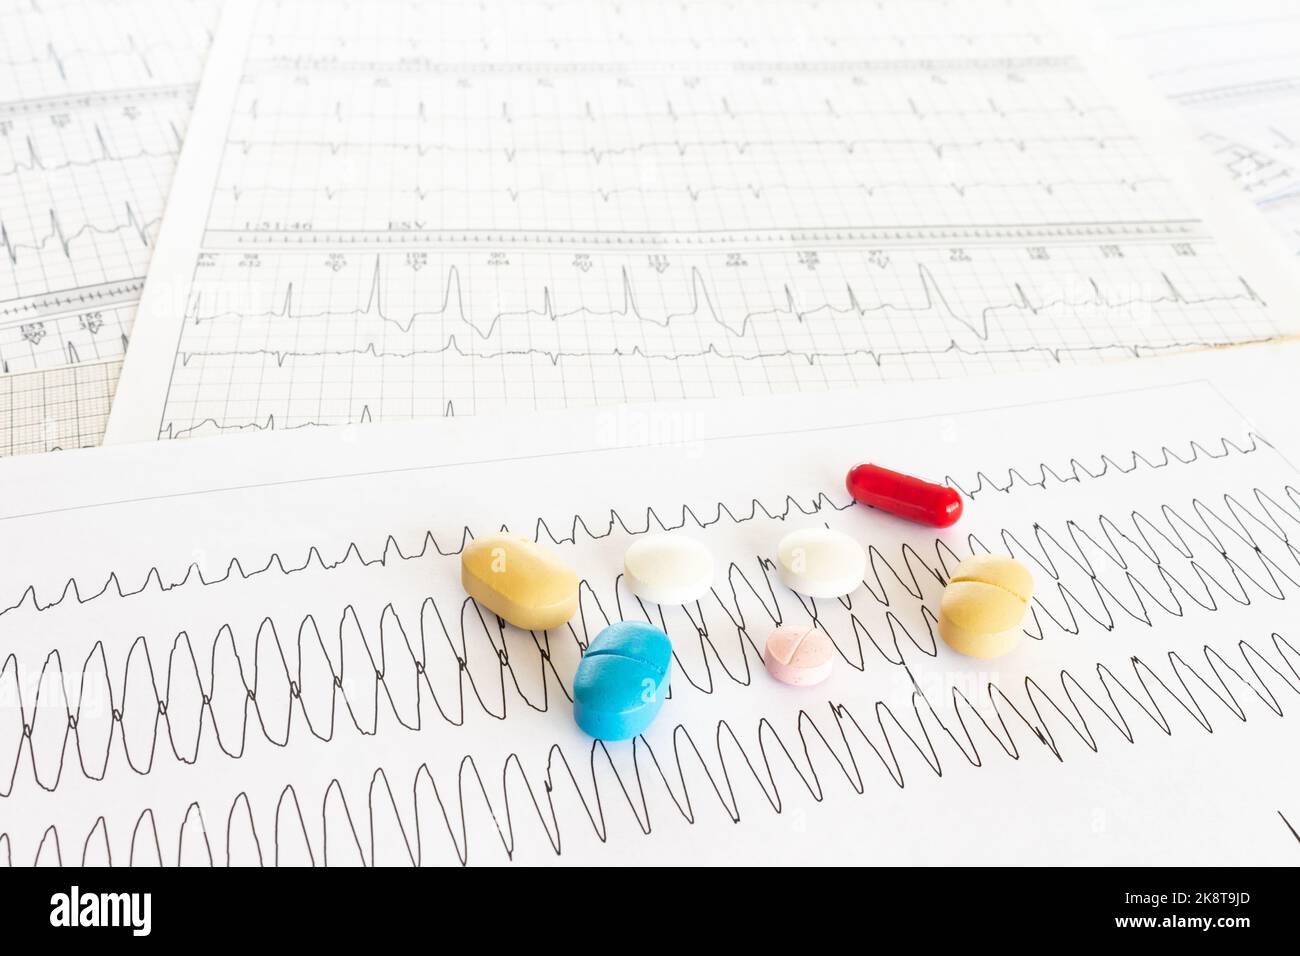 Electrocardiogram with ventricular tachycardia and some colored pills. Cardiovascular disease concept. Stock Photo